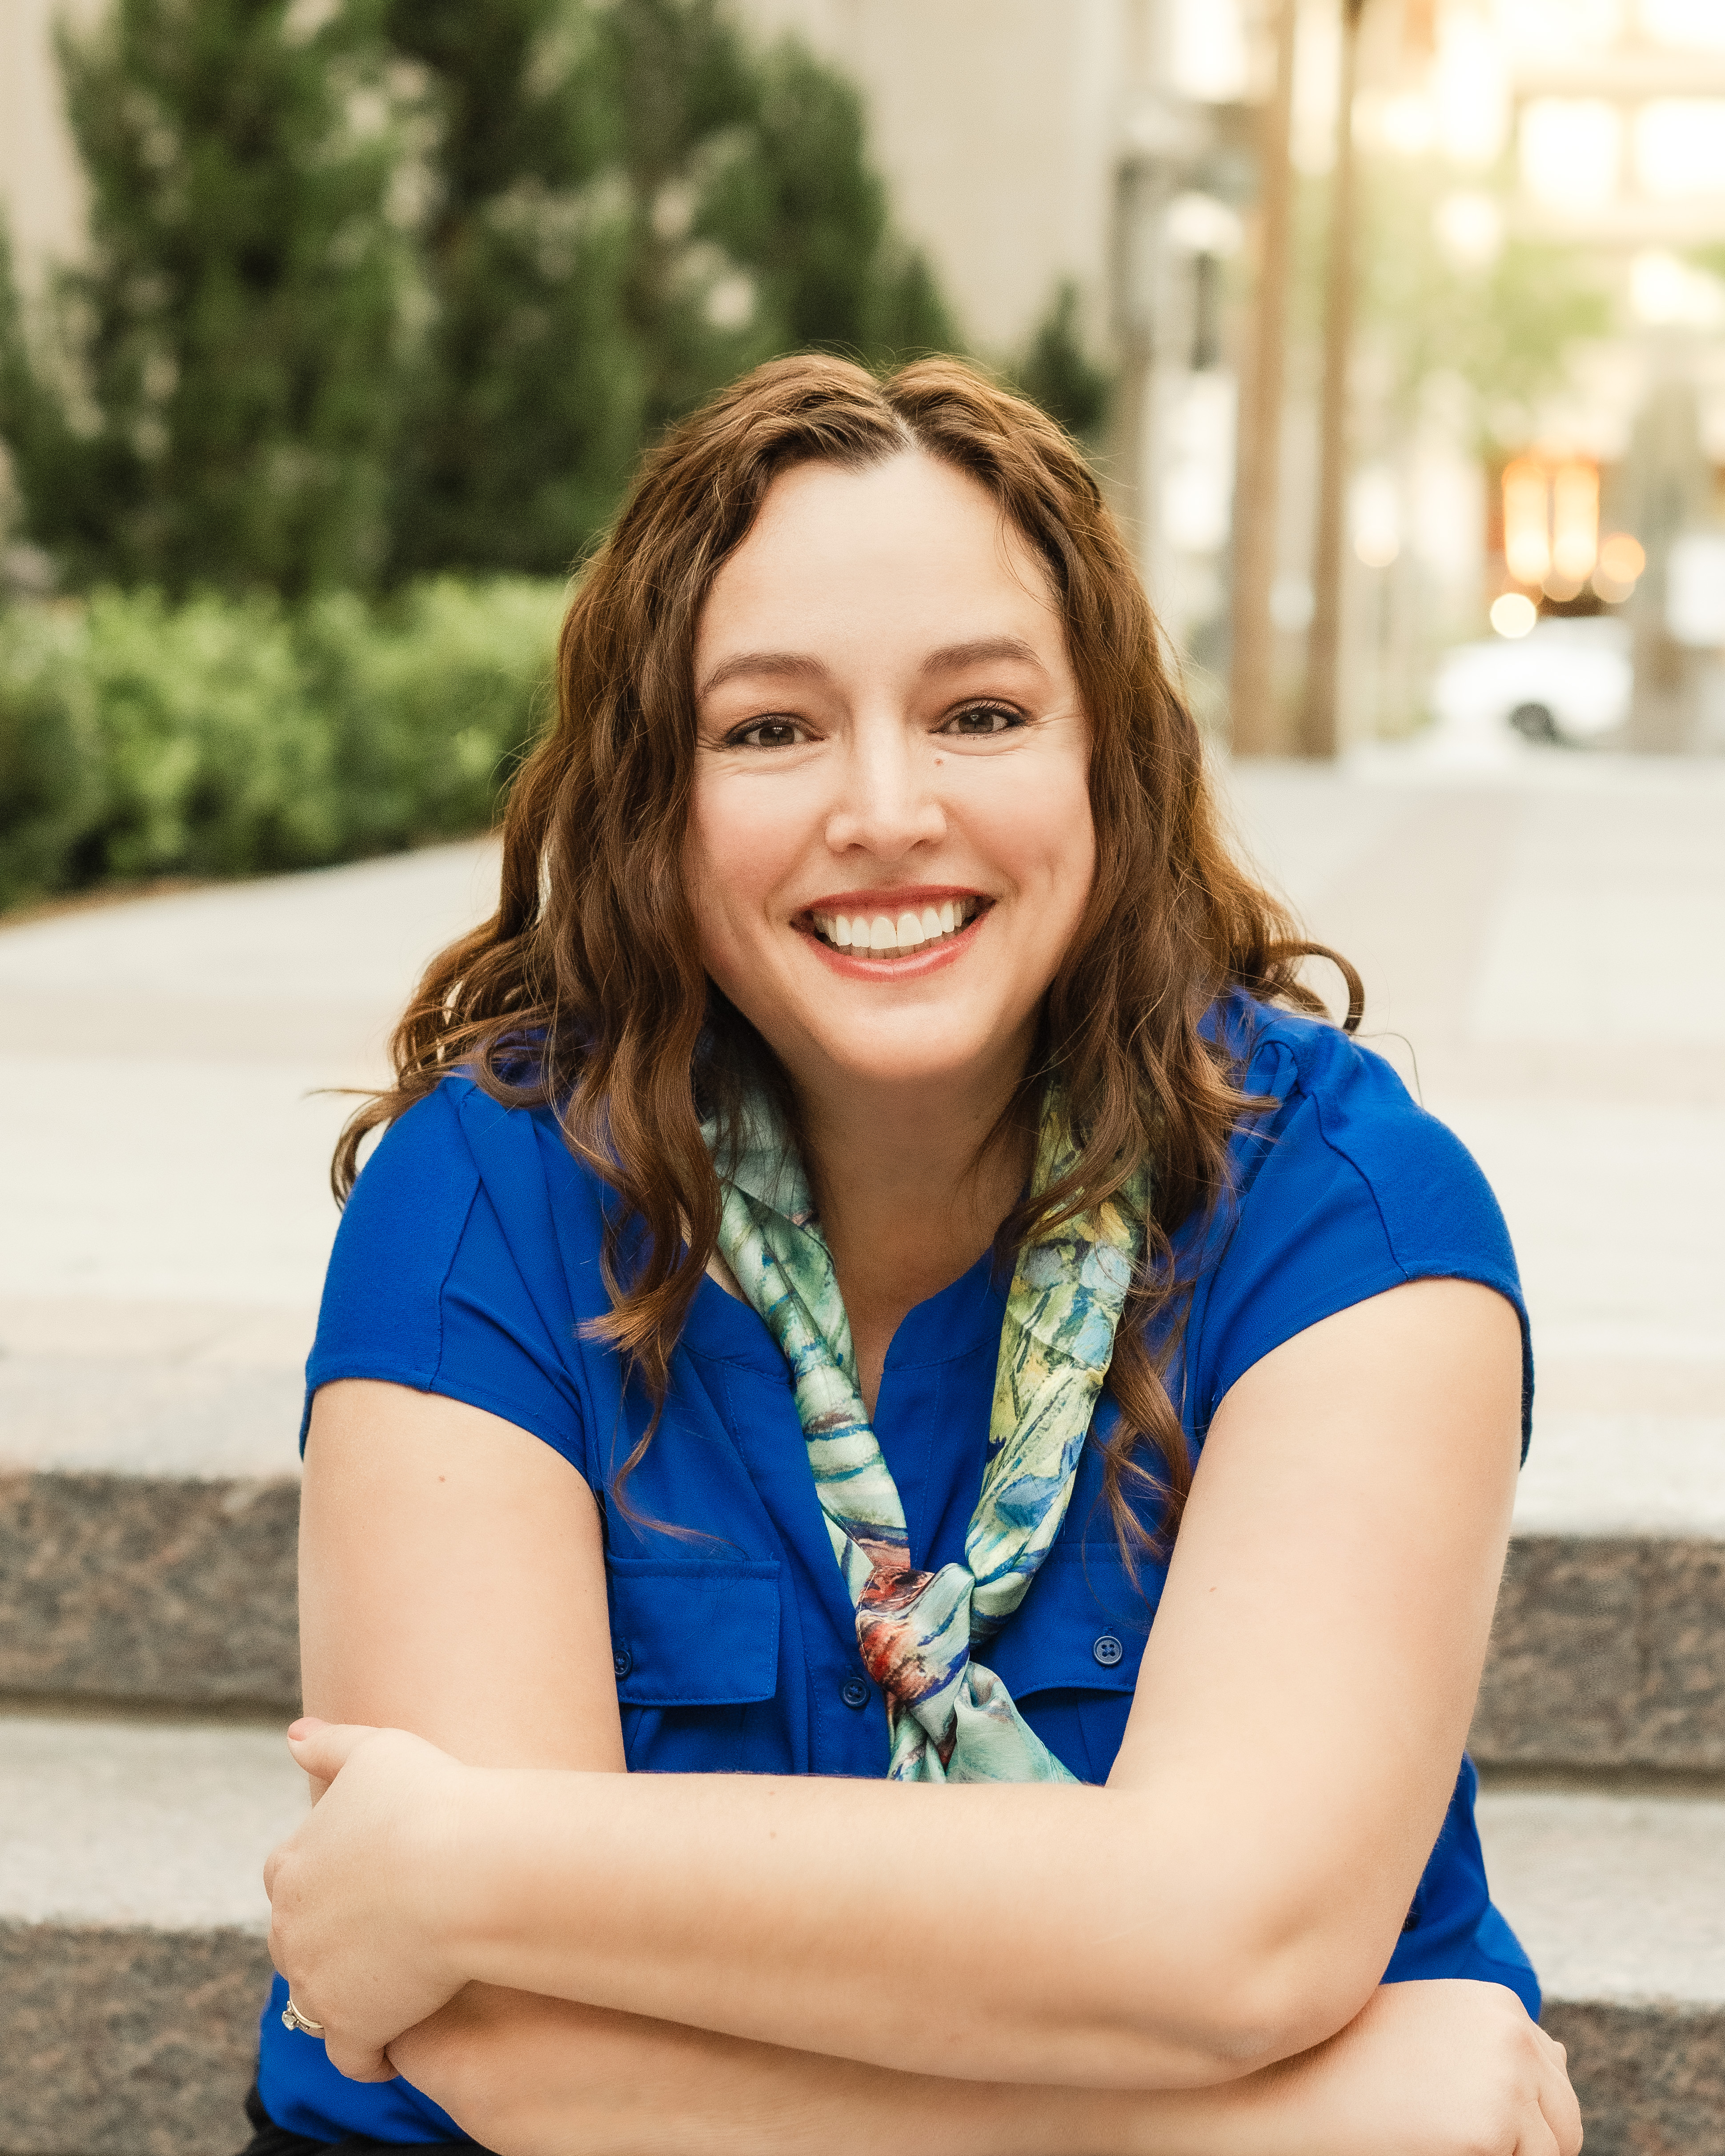 Amanda Skenandore outdoors, seated on steps and smiling at camera